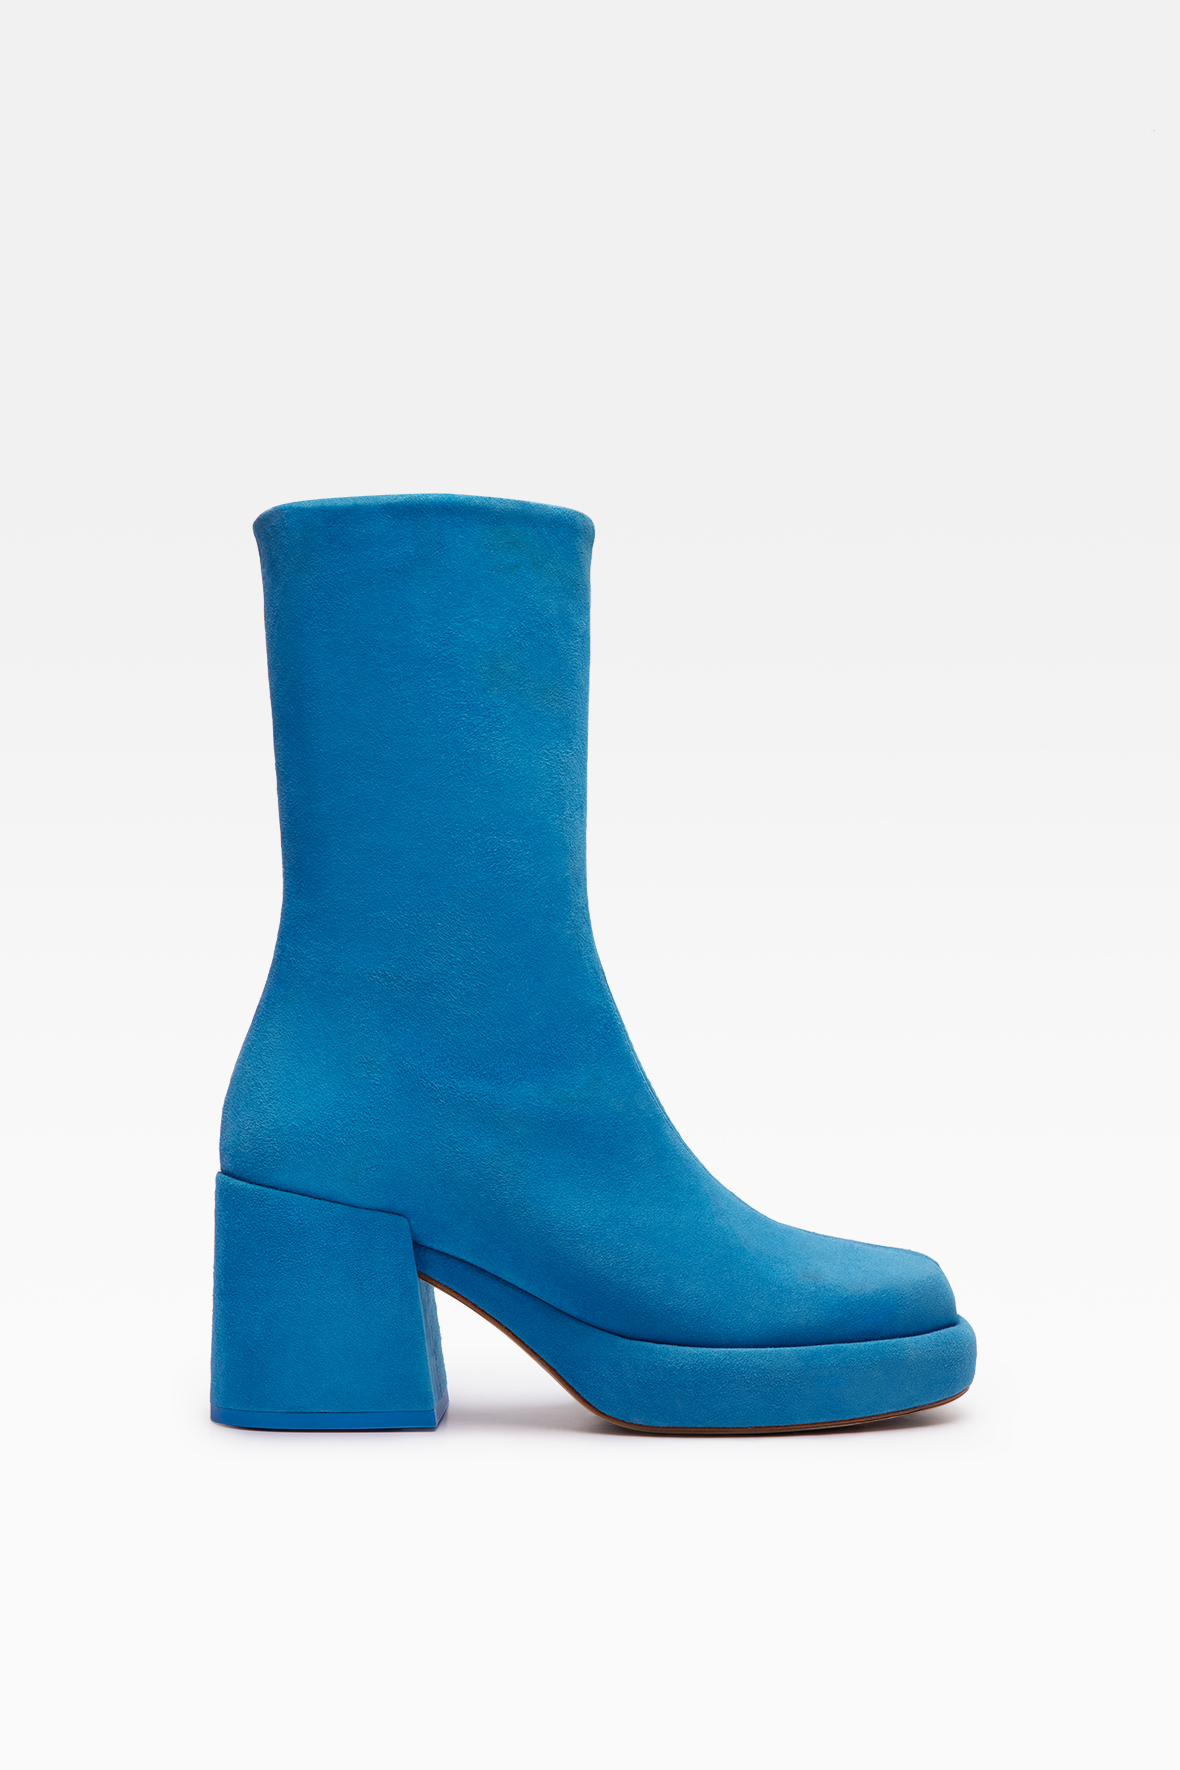 Susaye Blue Boots | Miista Europe | Made in Spain